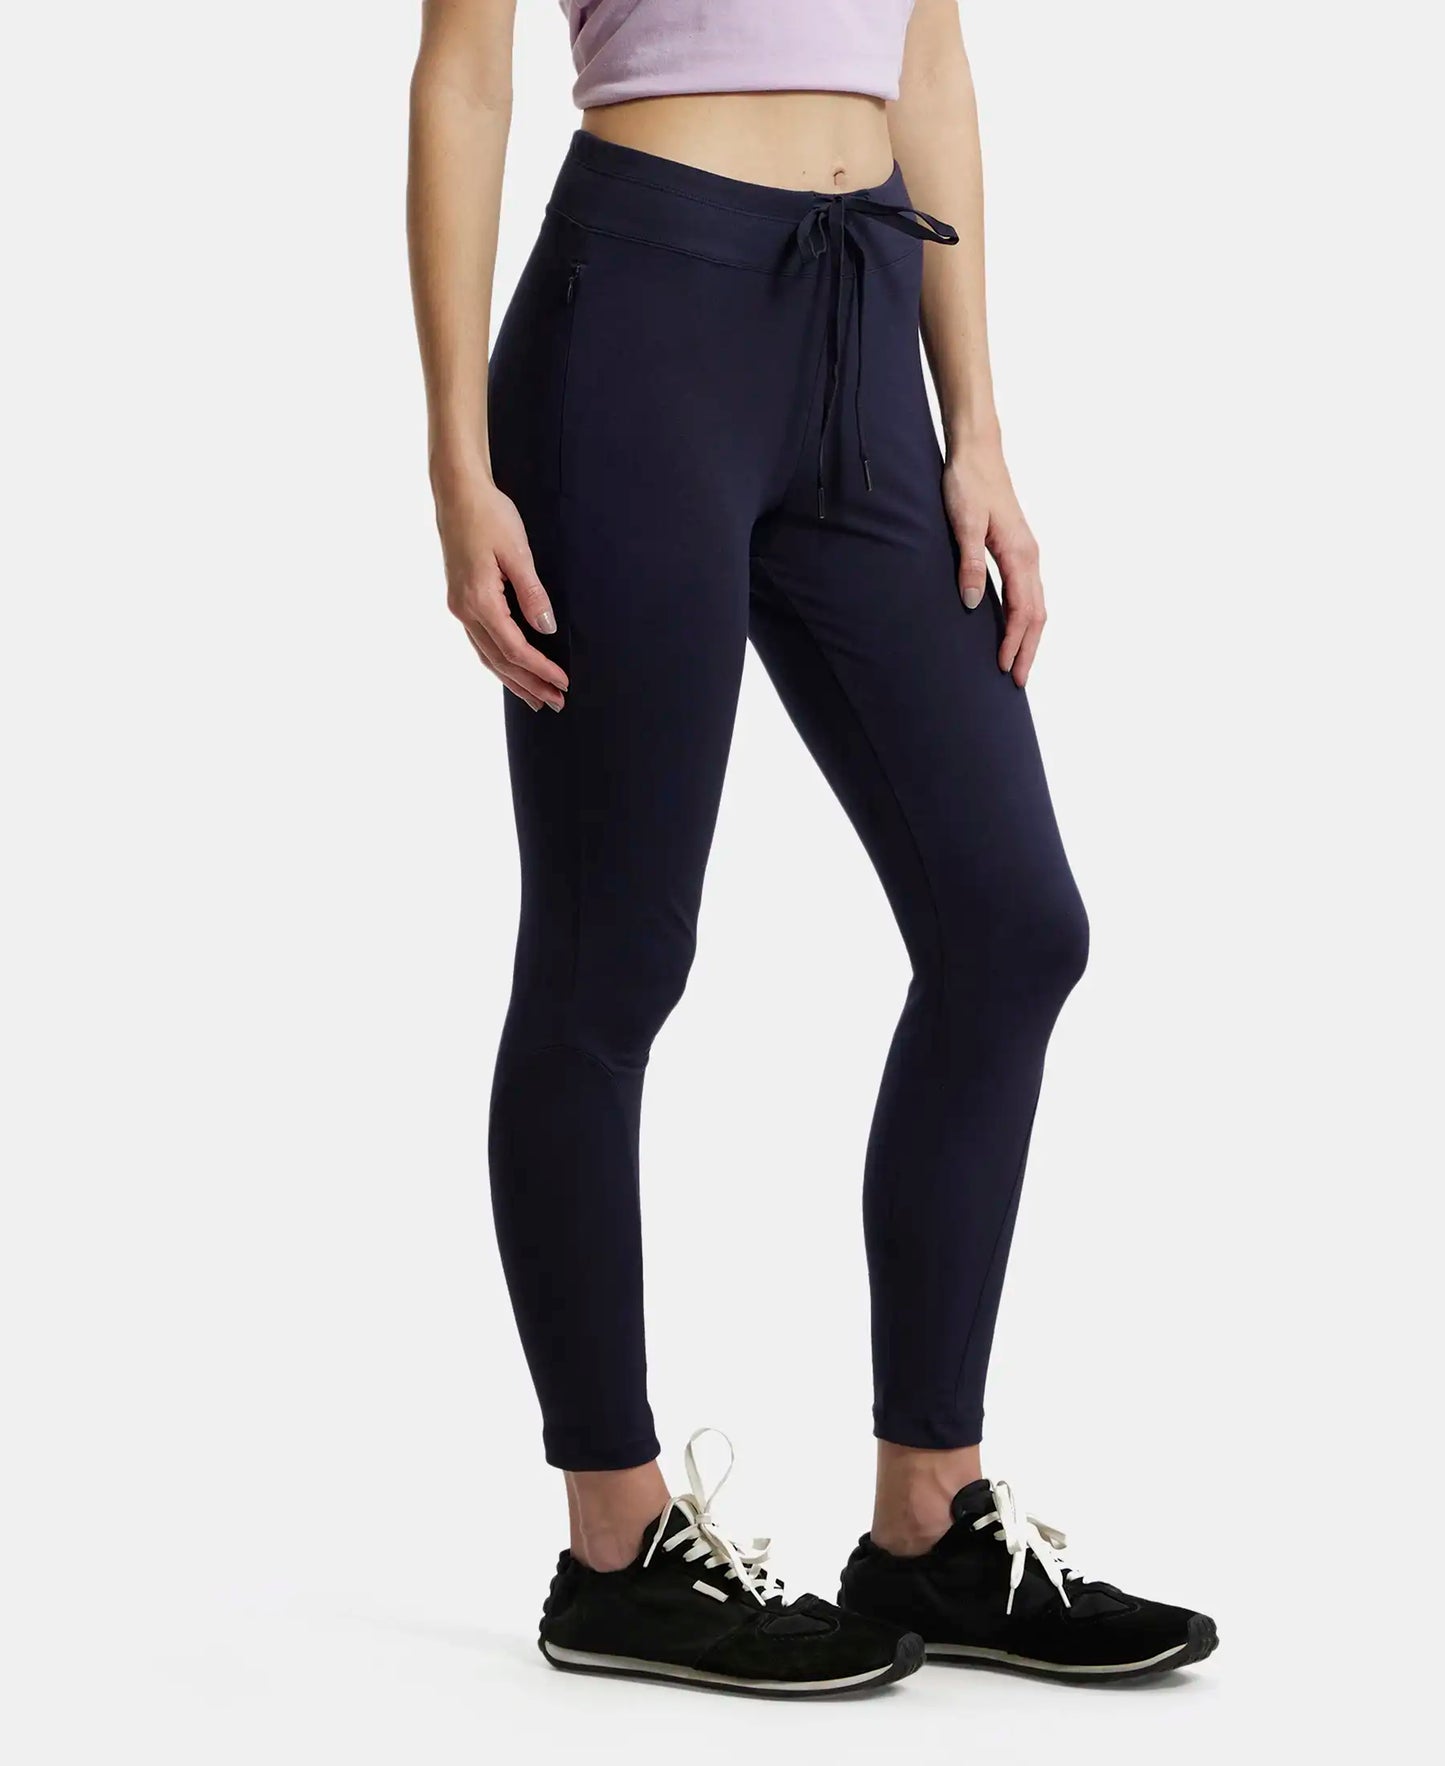 Super Combed Cotton Elastane Yoga Pants with Side Zipper Pocket - Navy Blazer-2